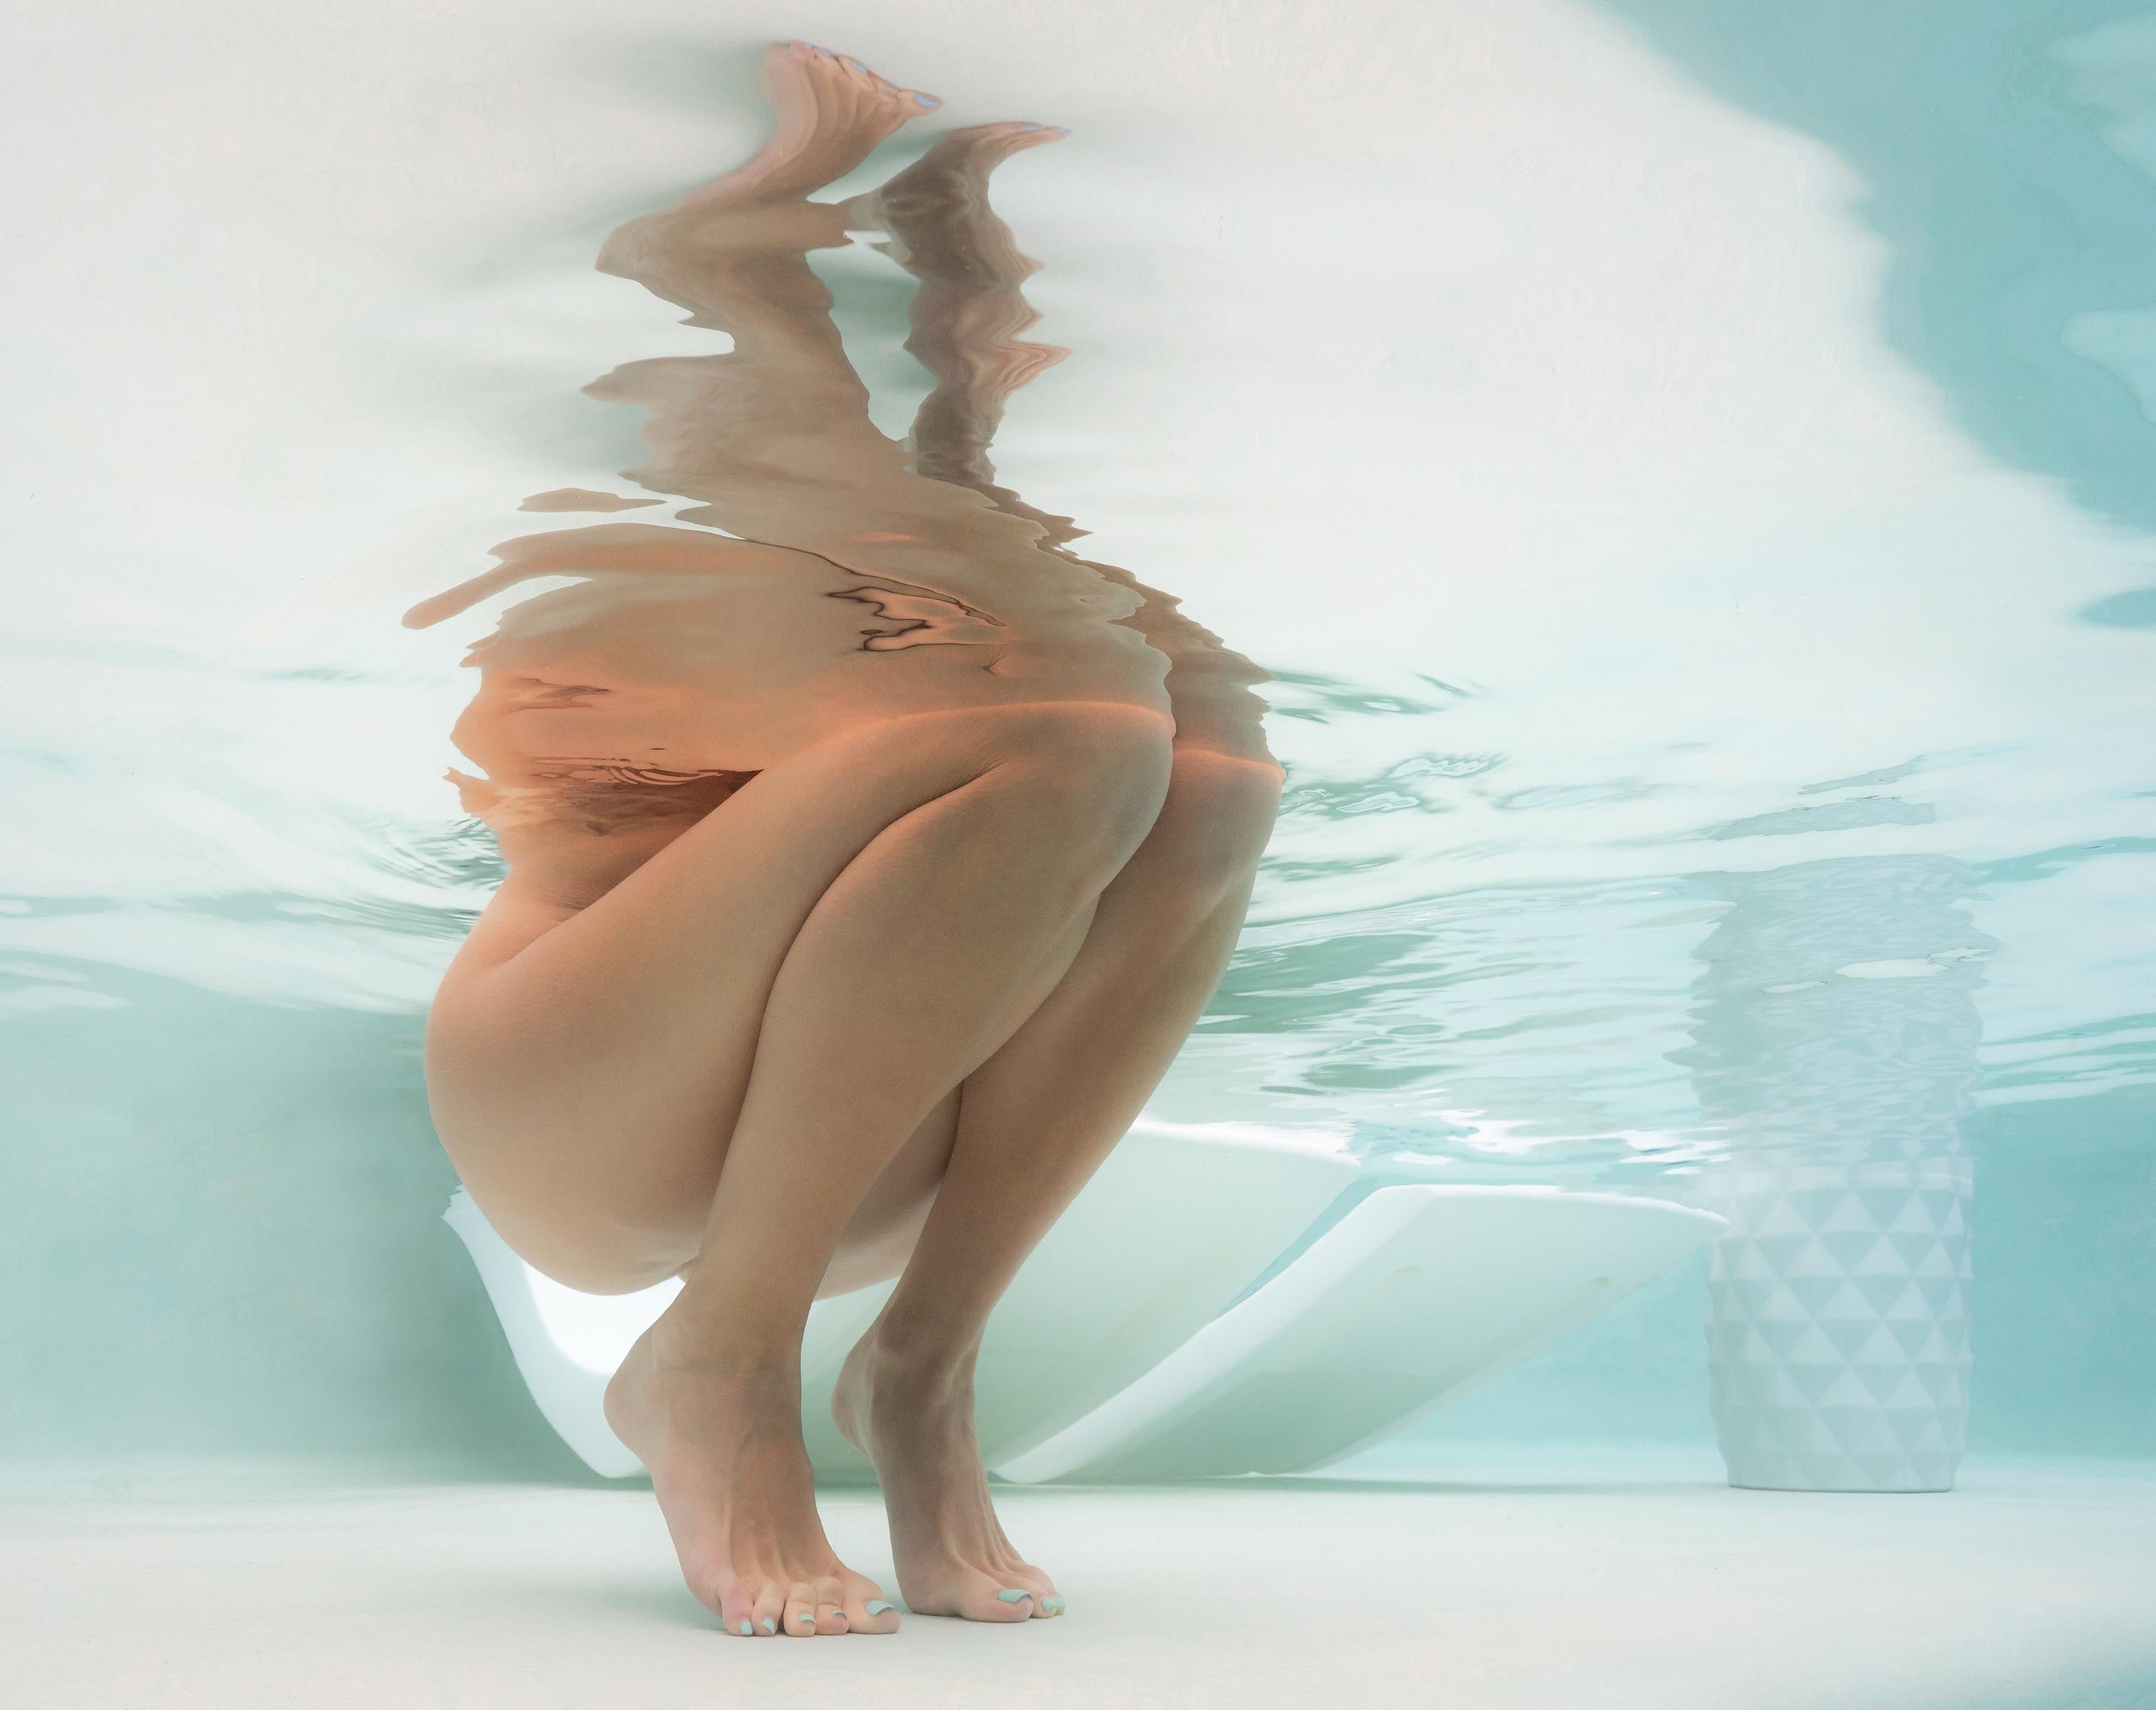 Pristine - underwater nude photograph - archival pigment print 35х50